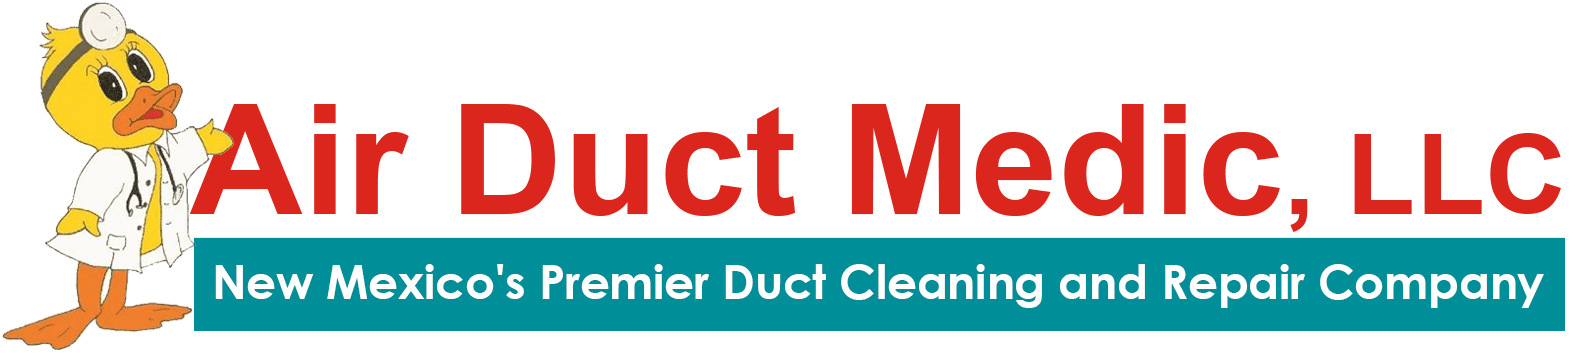 Air Duct Medic, LLC